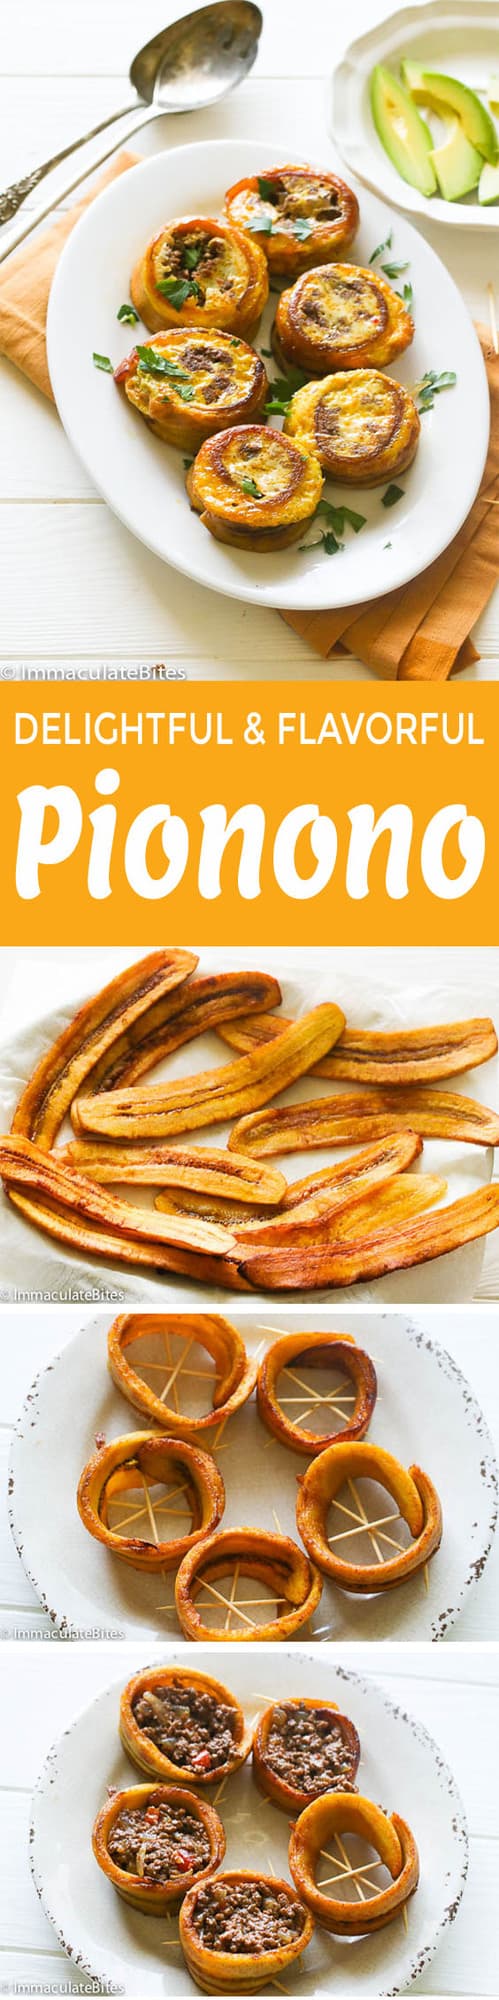 Pionono with step-by-step